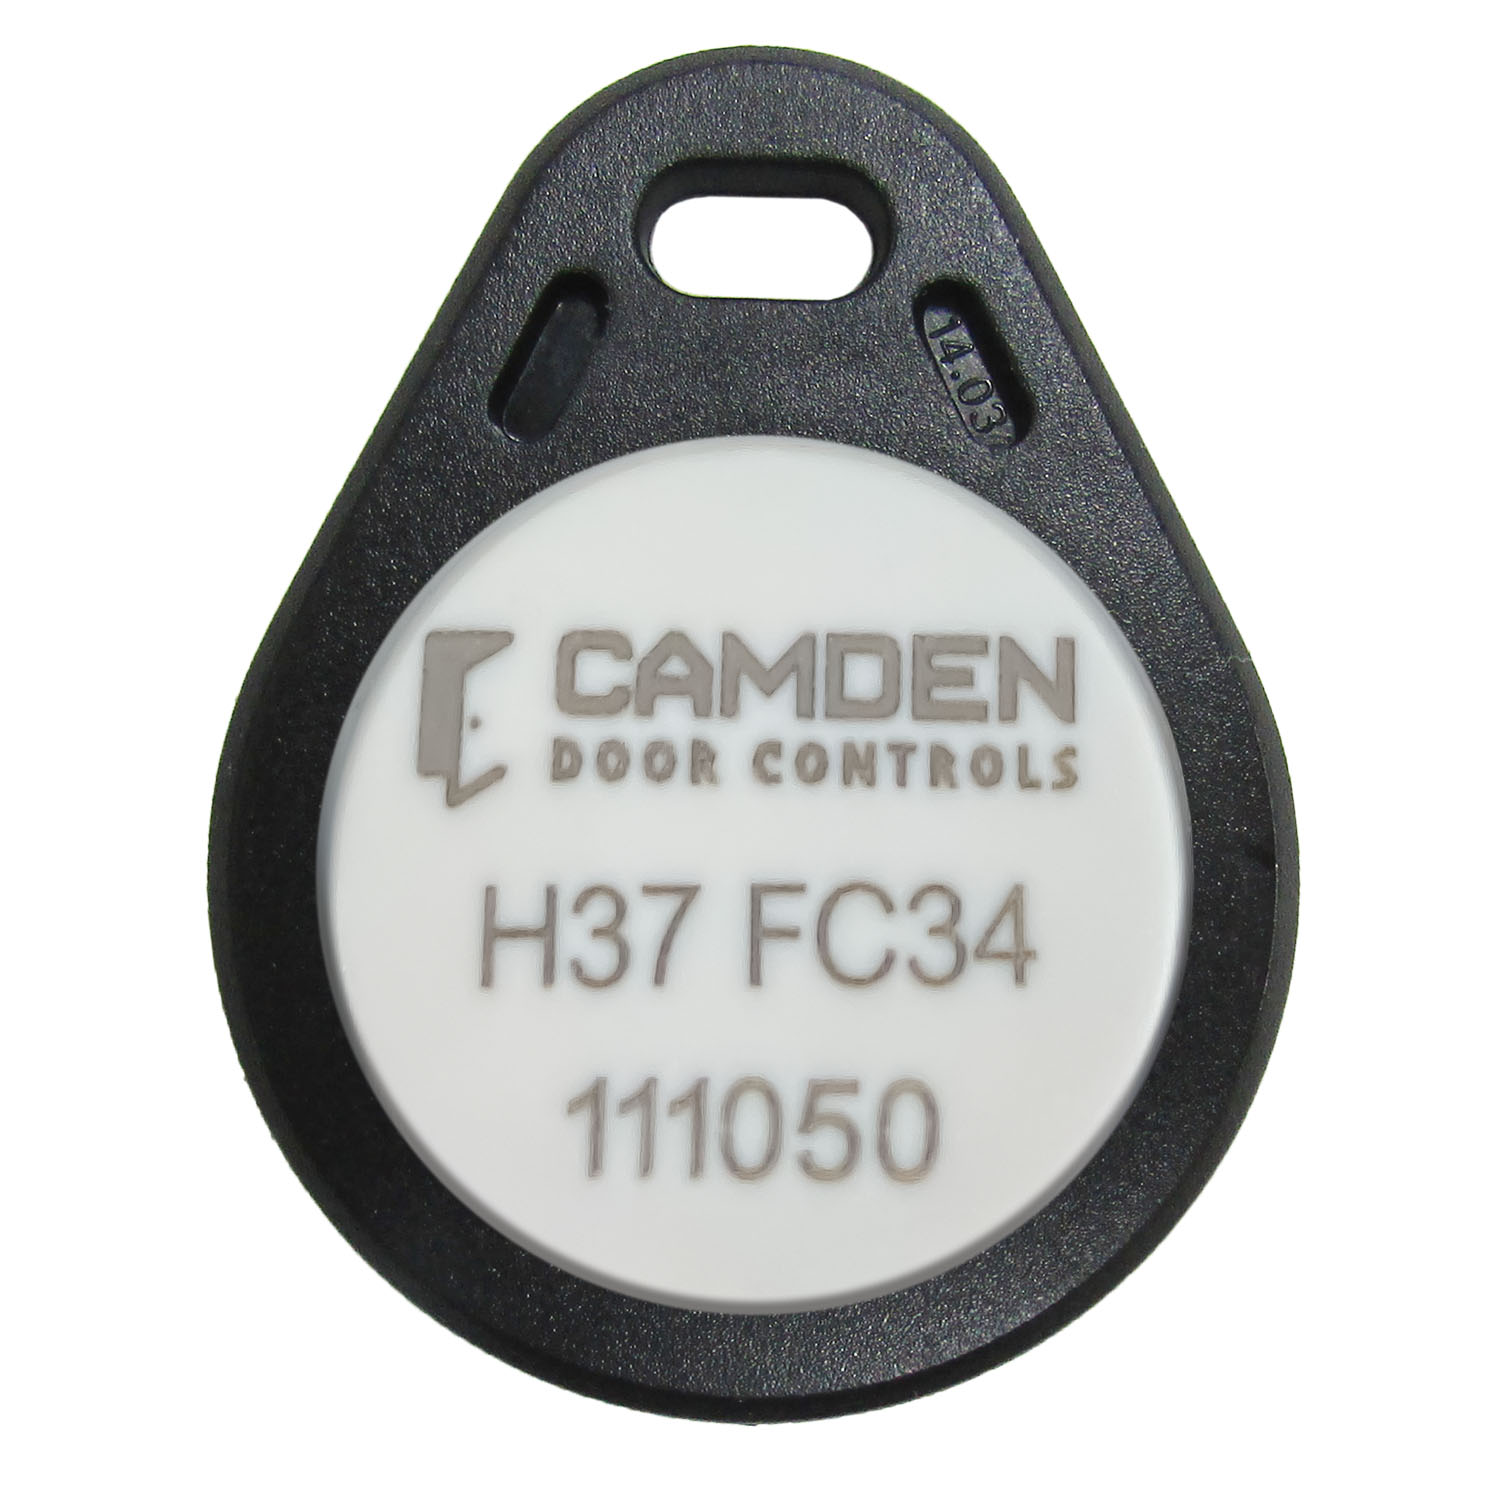 CX-EPD0009: Magnetic Cabinet Lock - Magnetic Locks - Locking